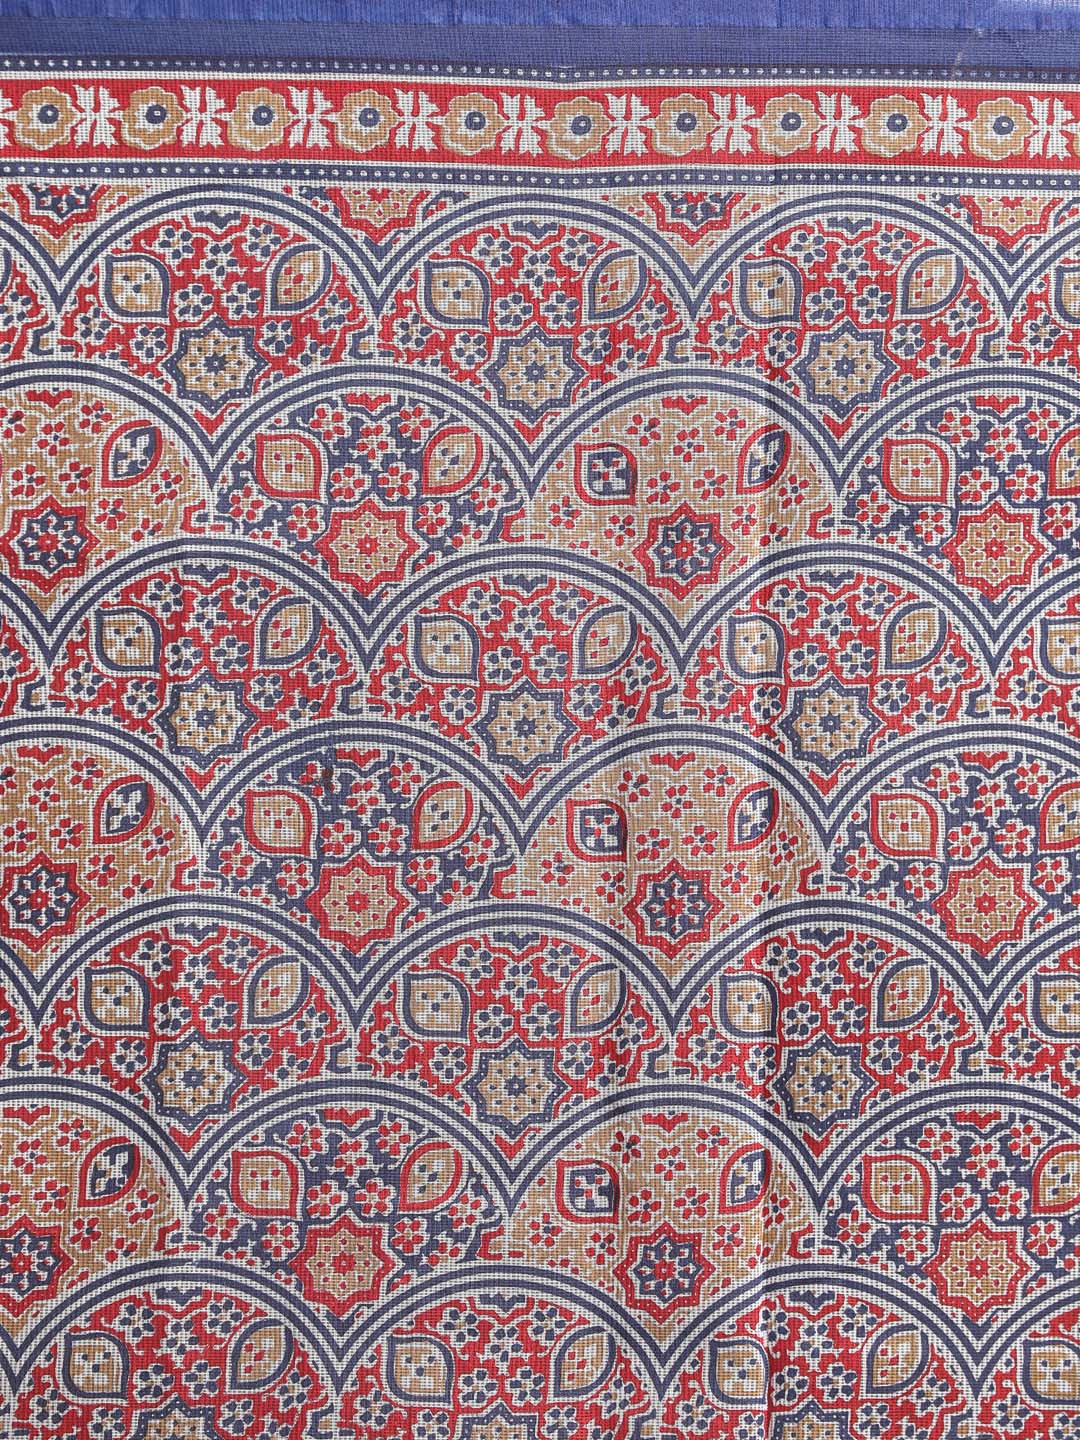 Indethnic Printed Super Net Saree in Blue - Saree Detail View